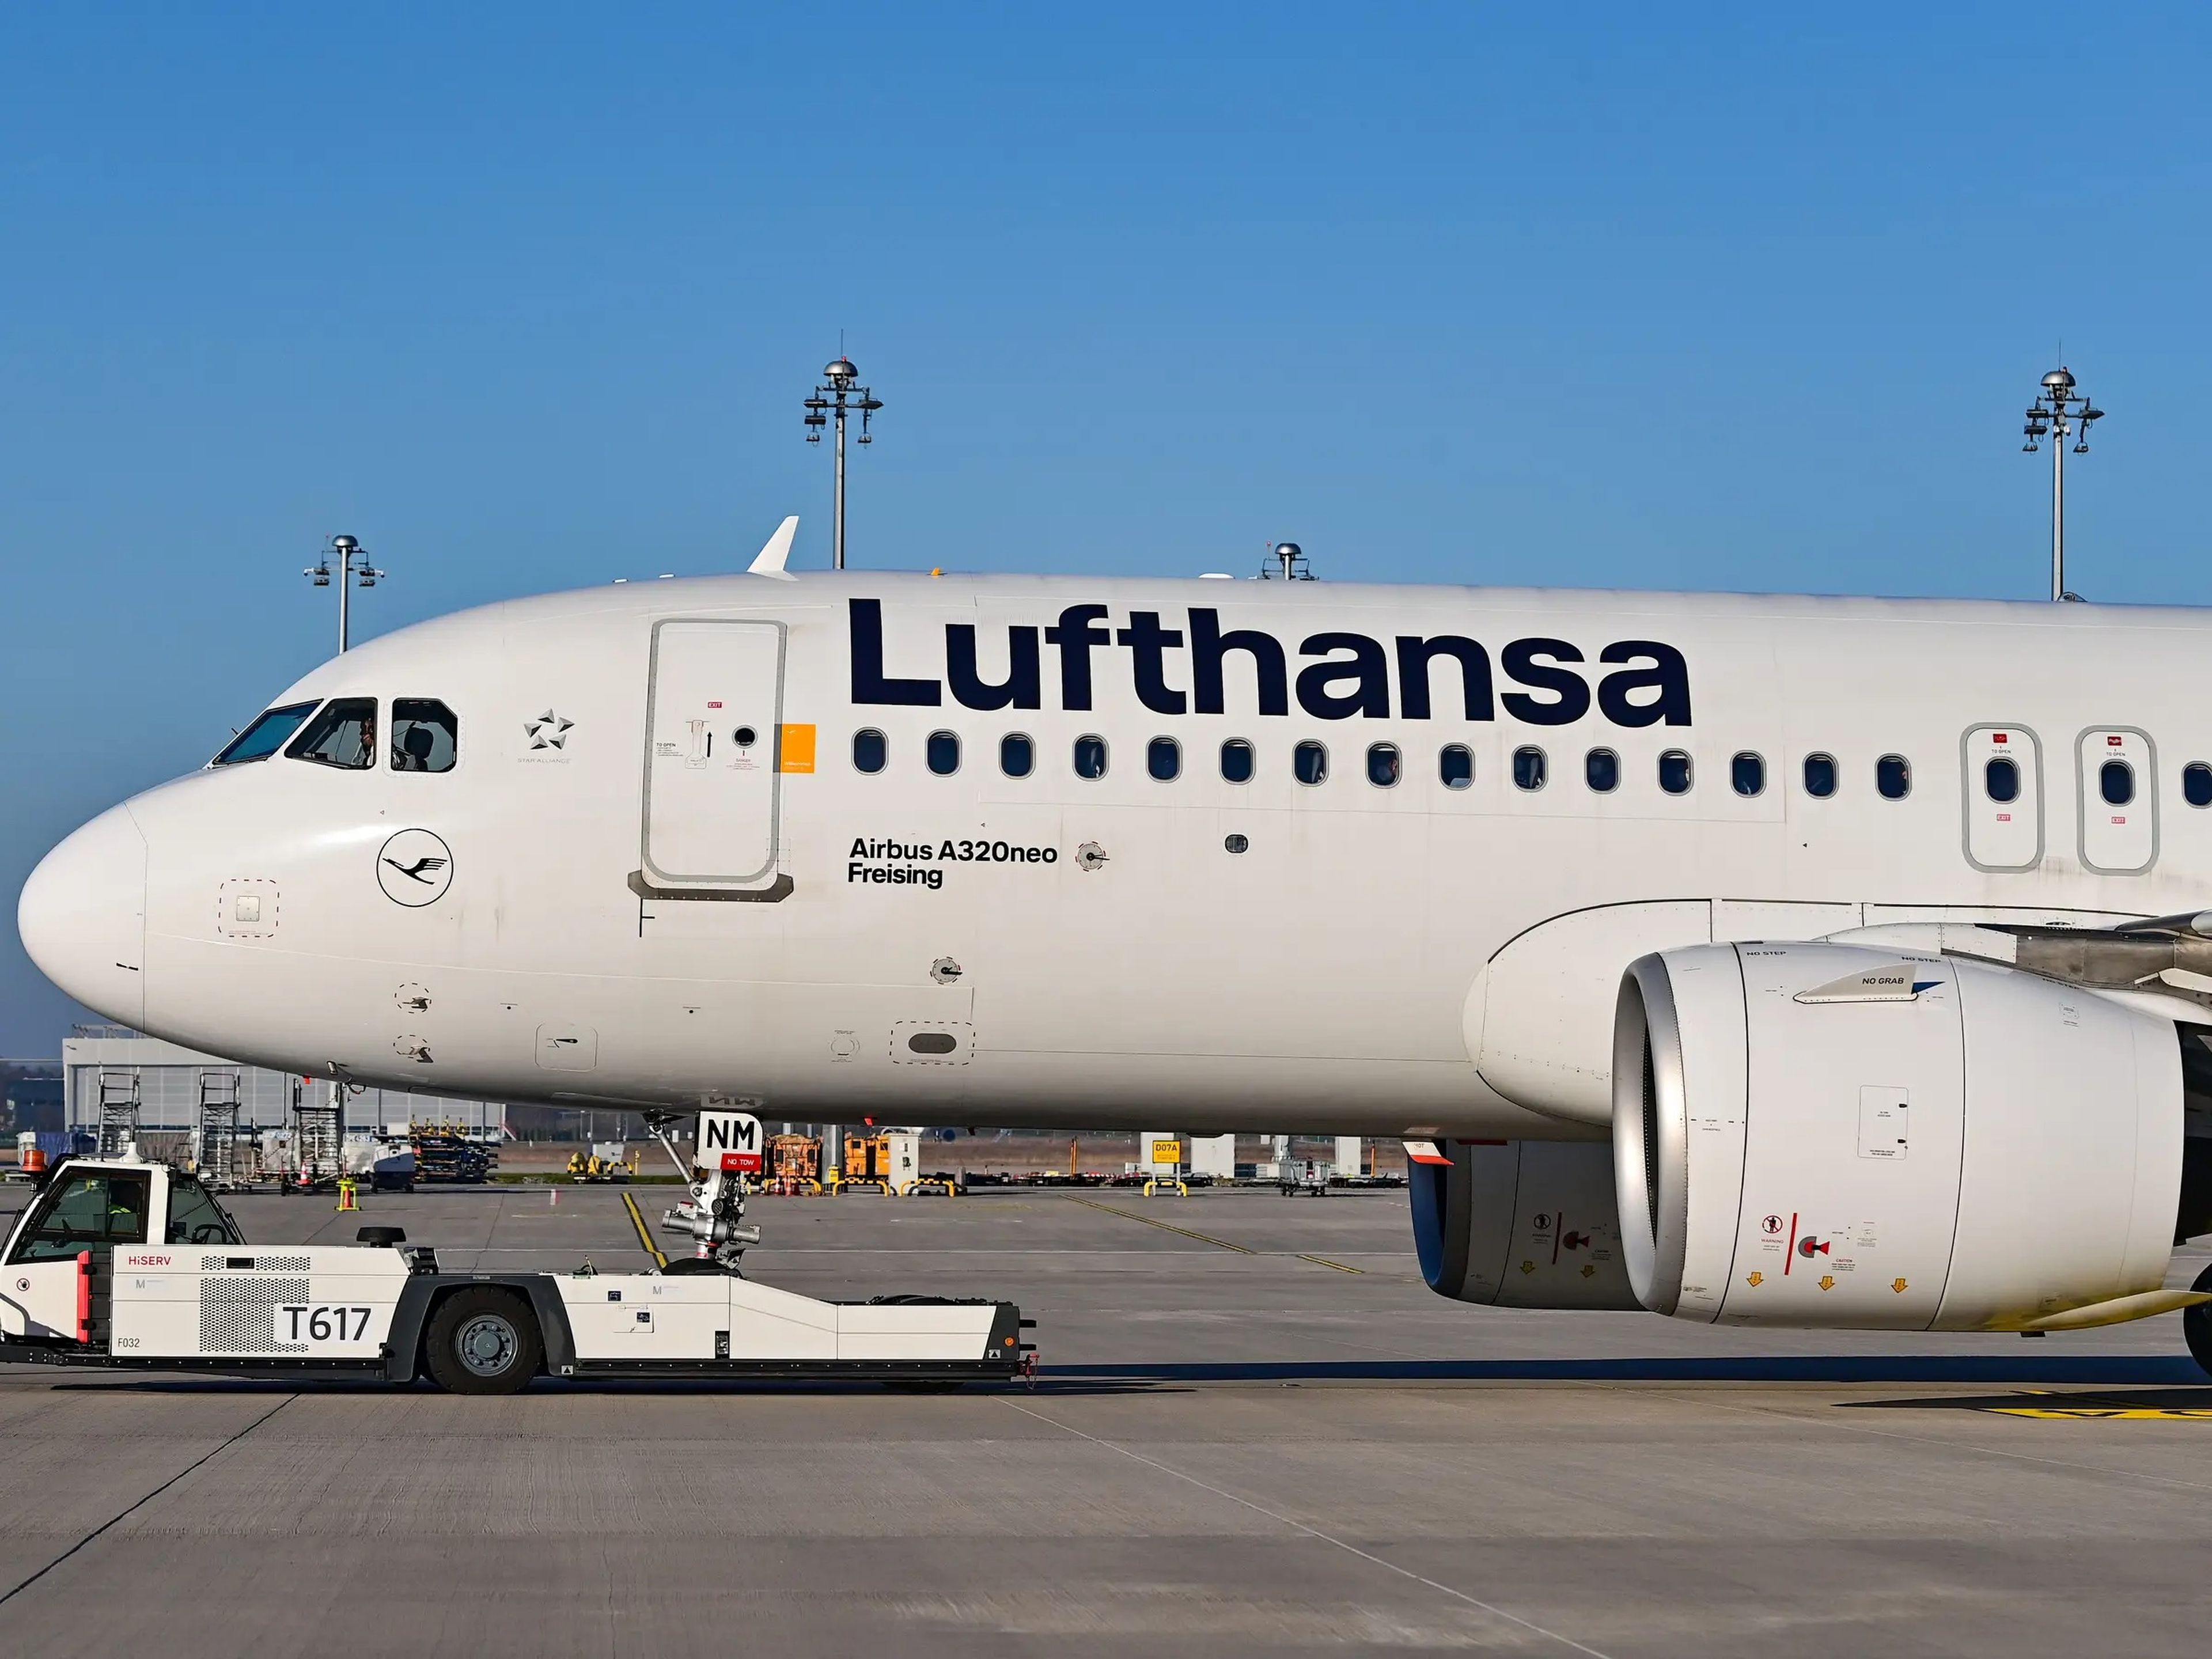 An image of a Lufthansa plane.